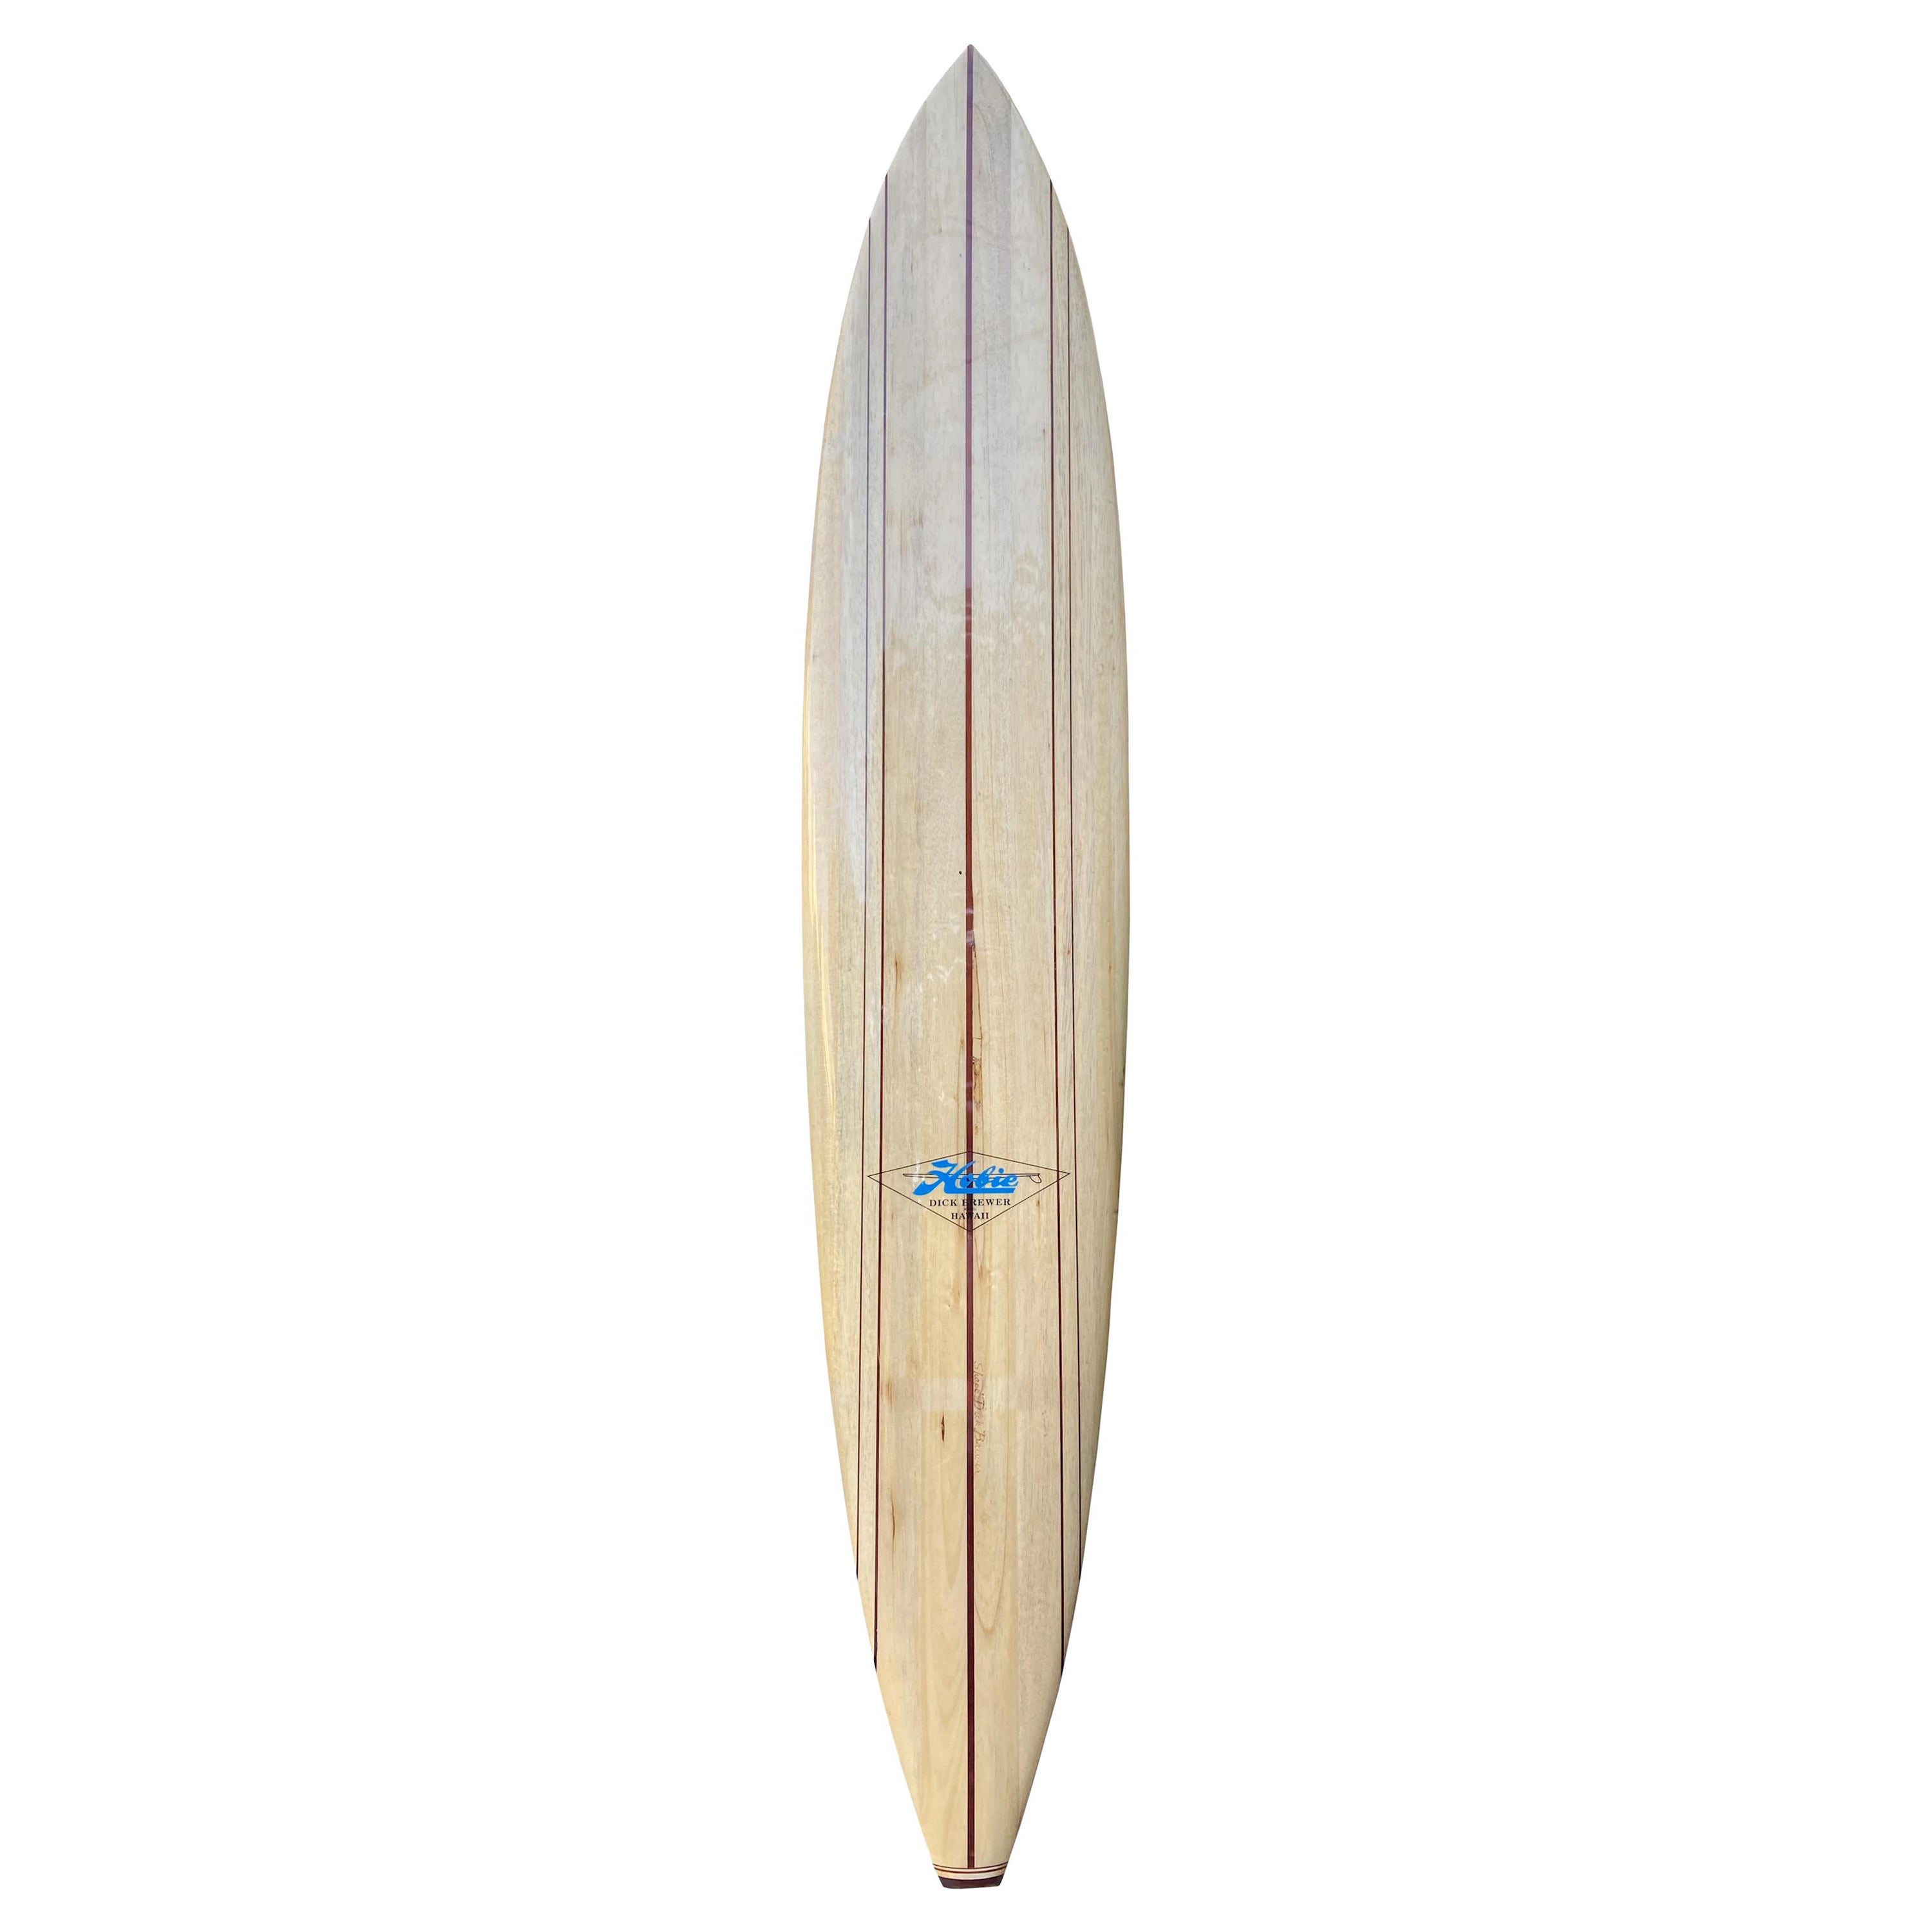 1965 Model Hobie Balsawood Big Wave Surfboard by Dick Brewer